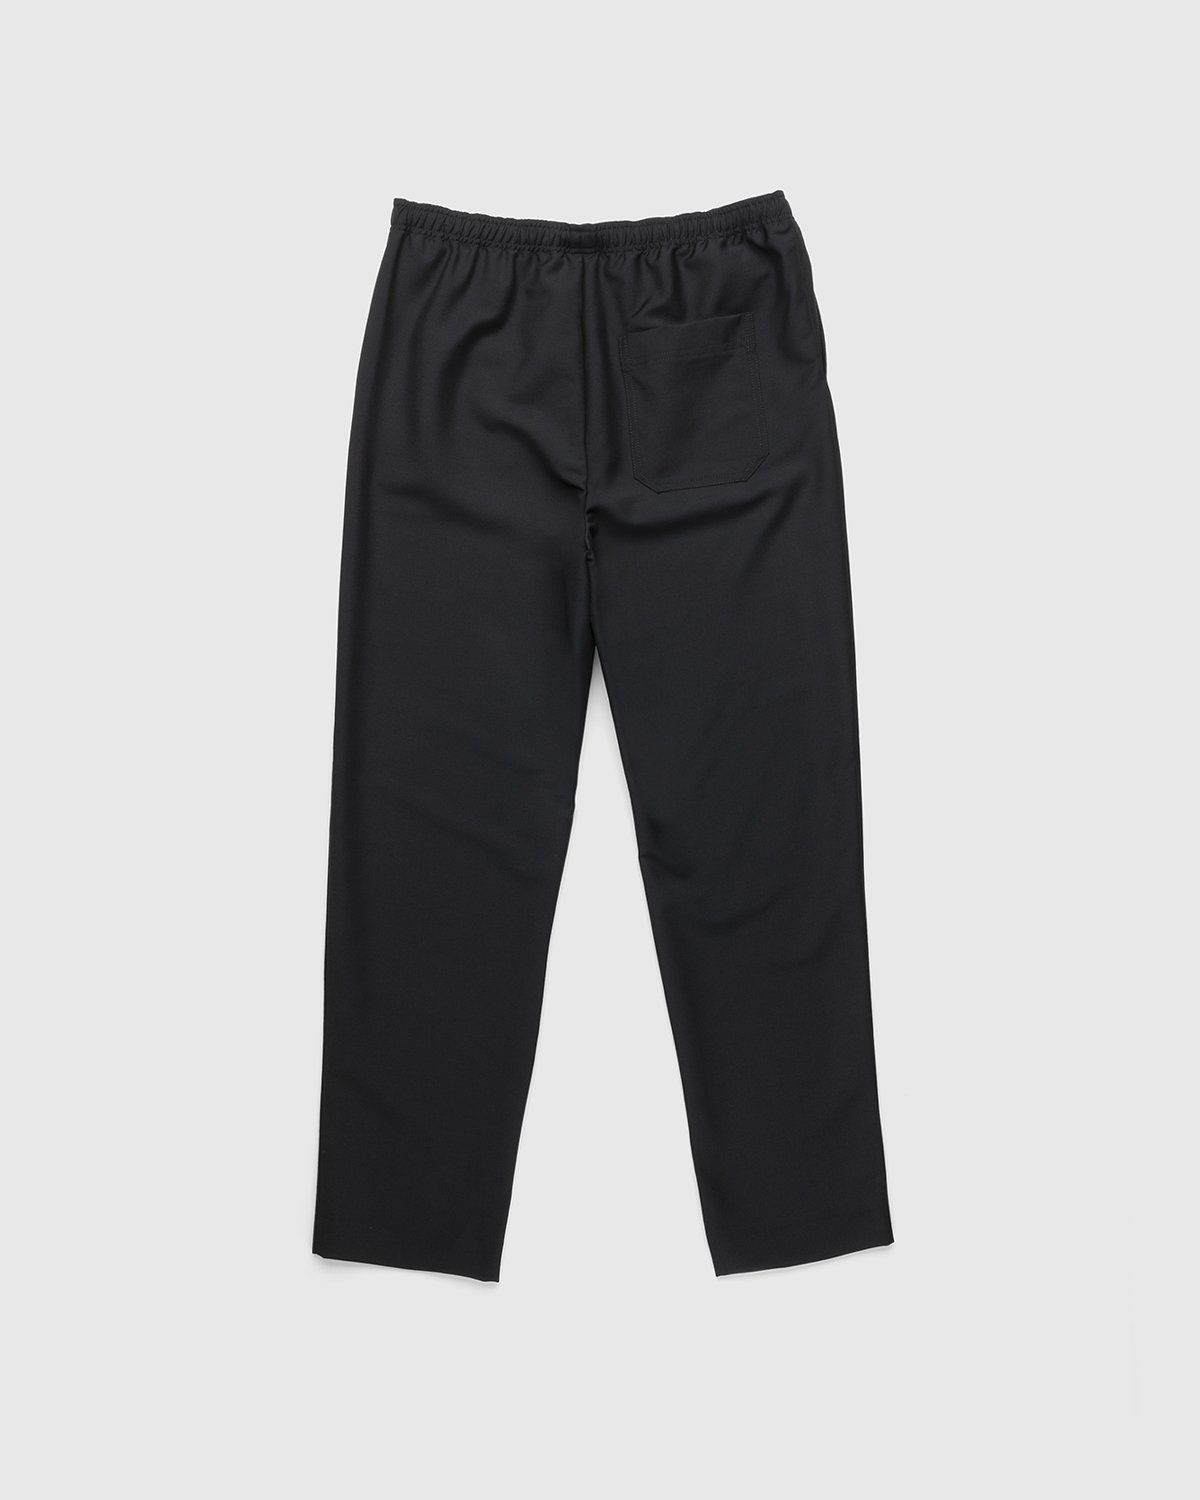 Acne Studios - Mohair Blend Drawstring Trousers Black - Clothing - Black - Image 2